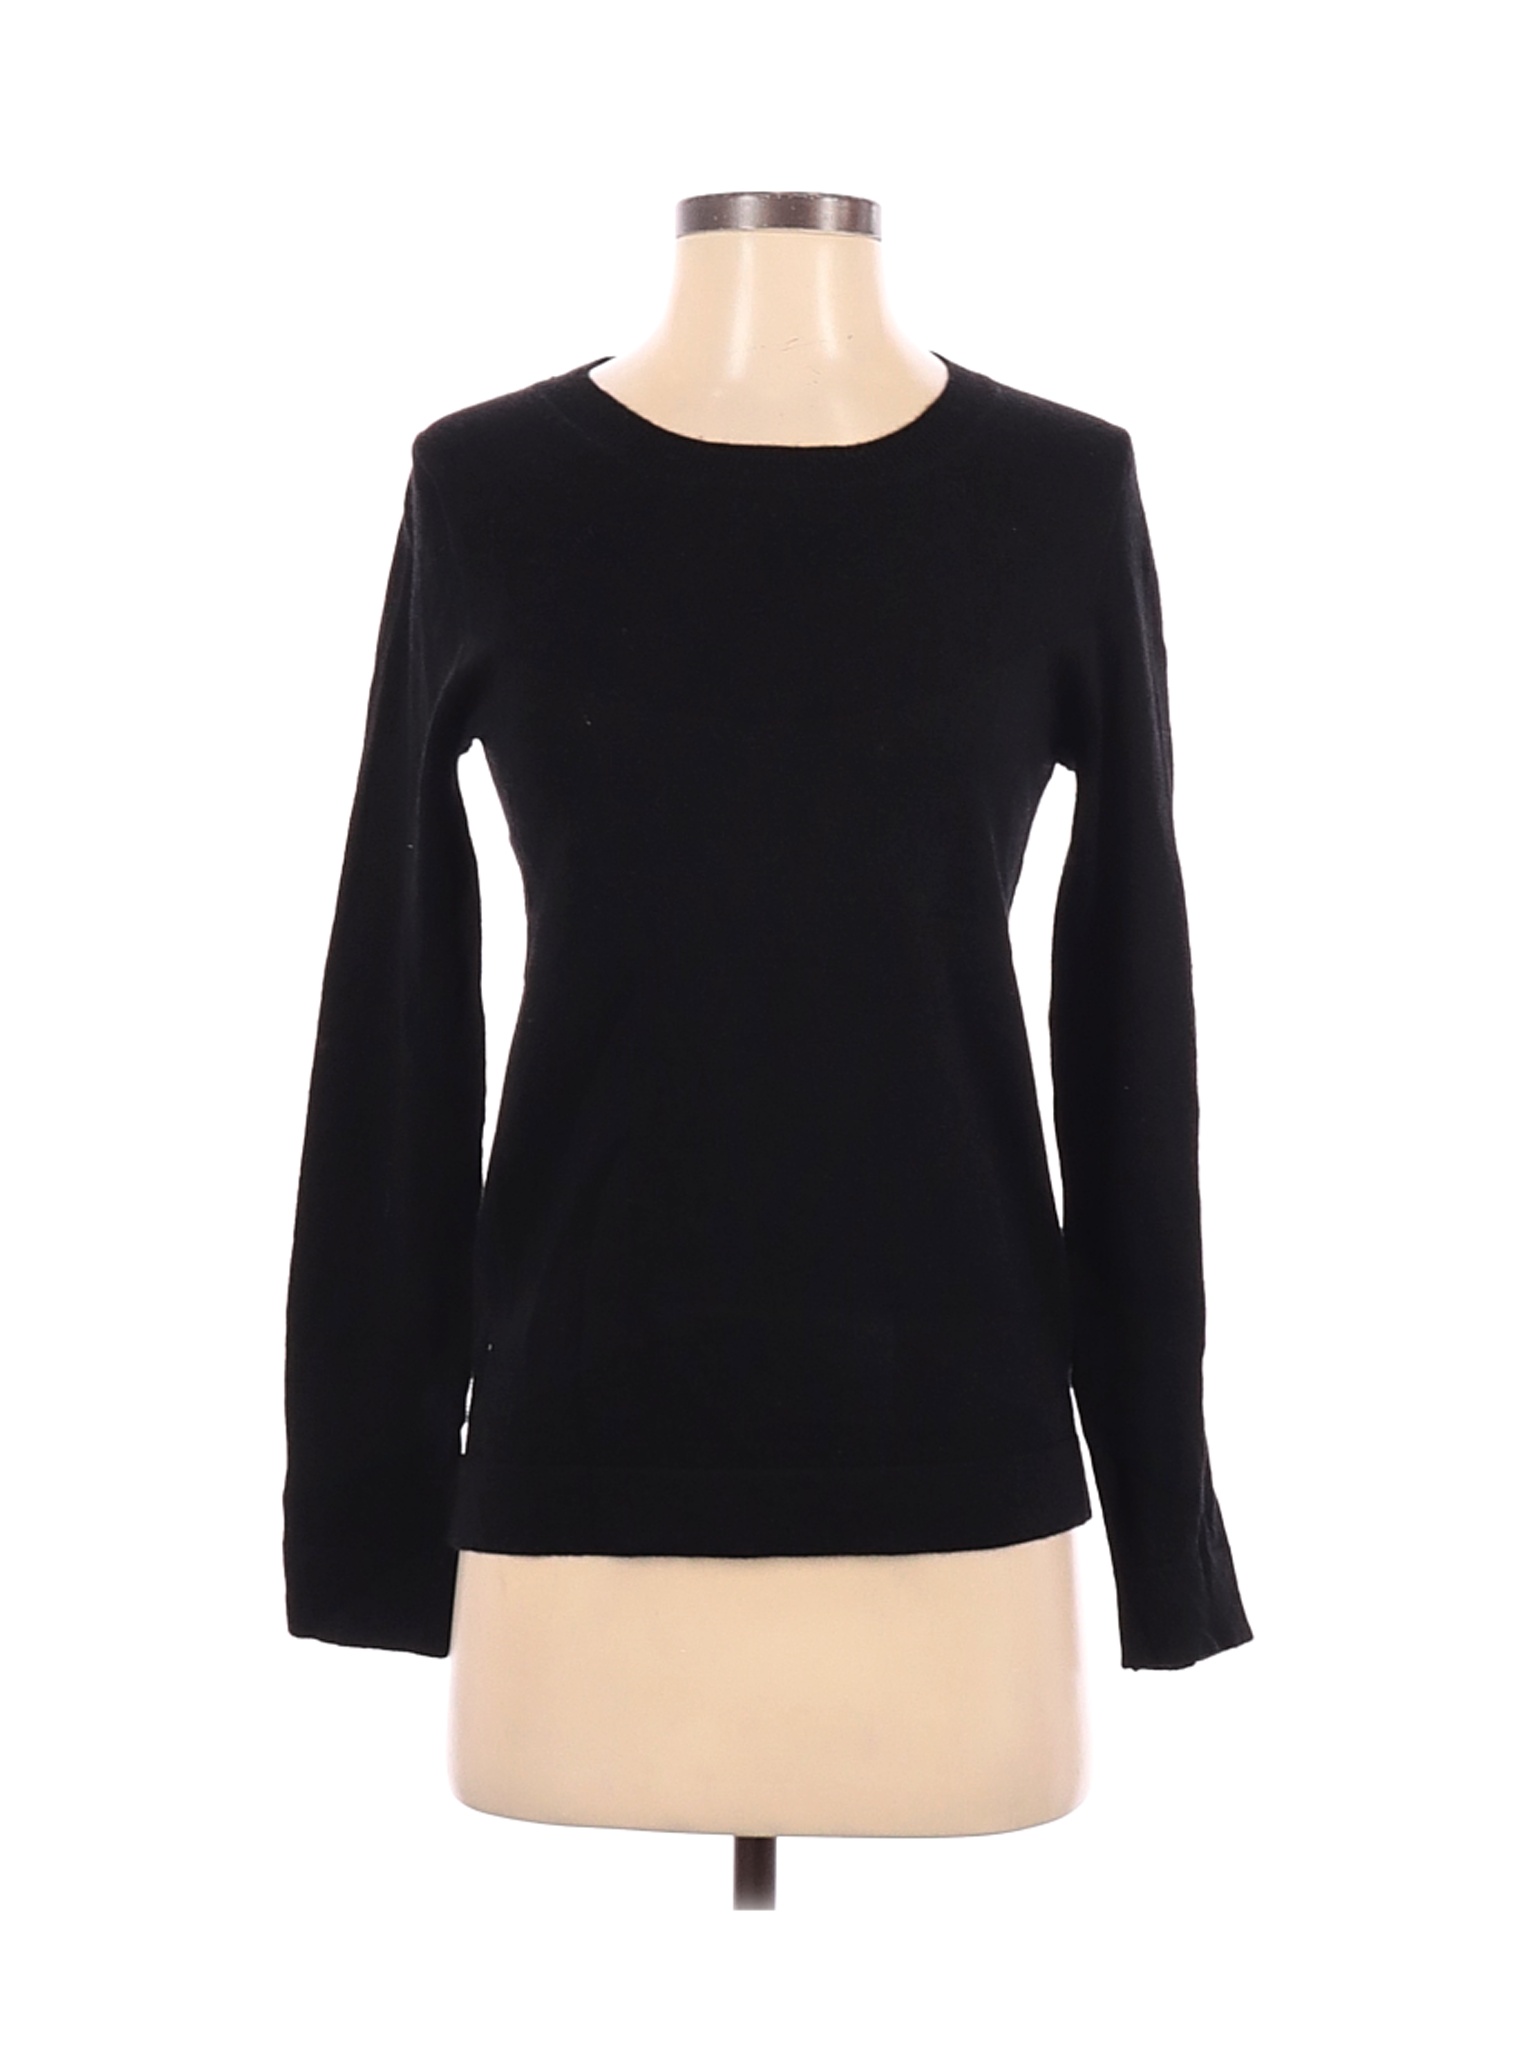 NWT J.Crew Women Black Pullover Sweater XS | eBay